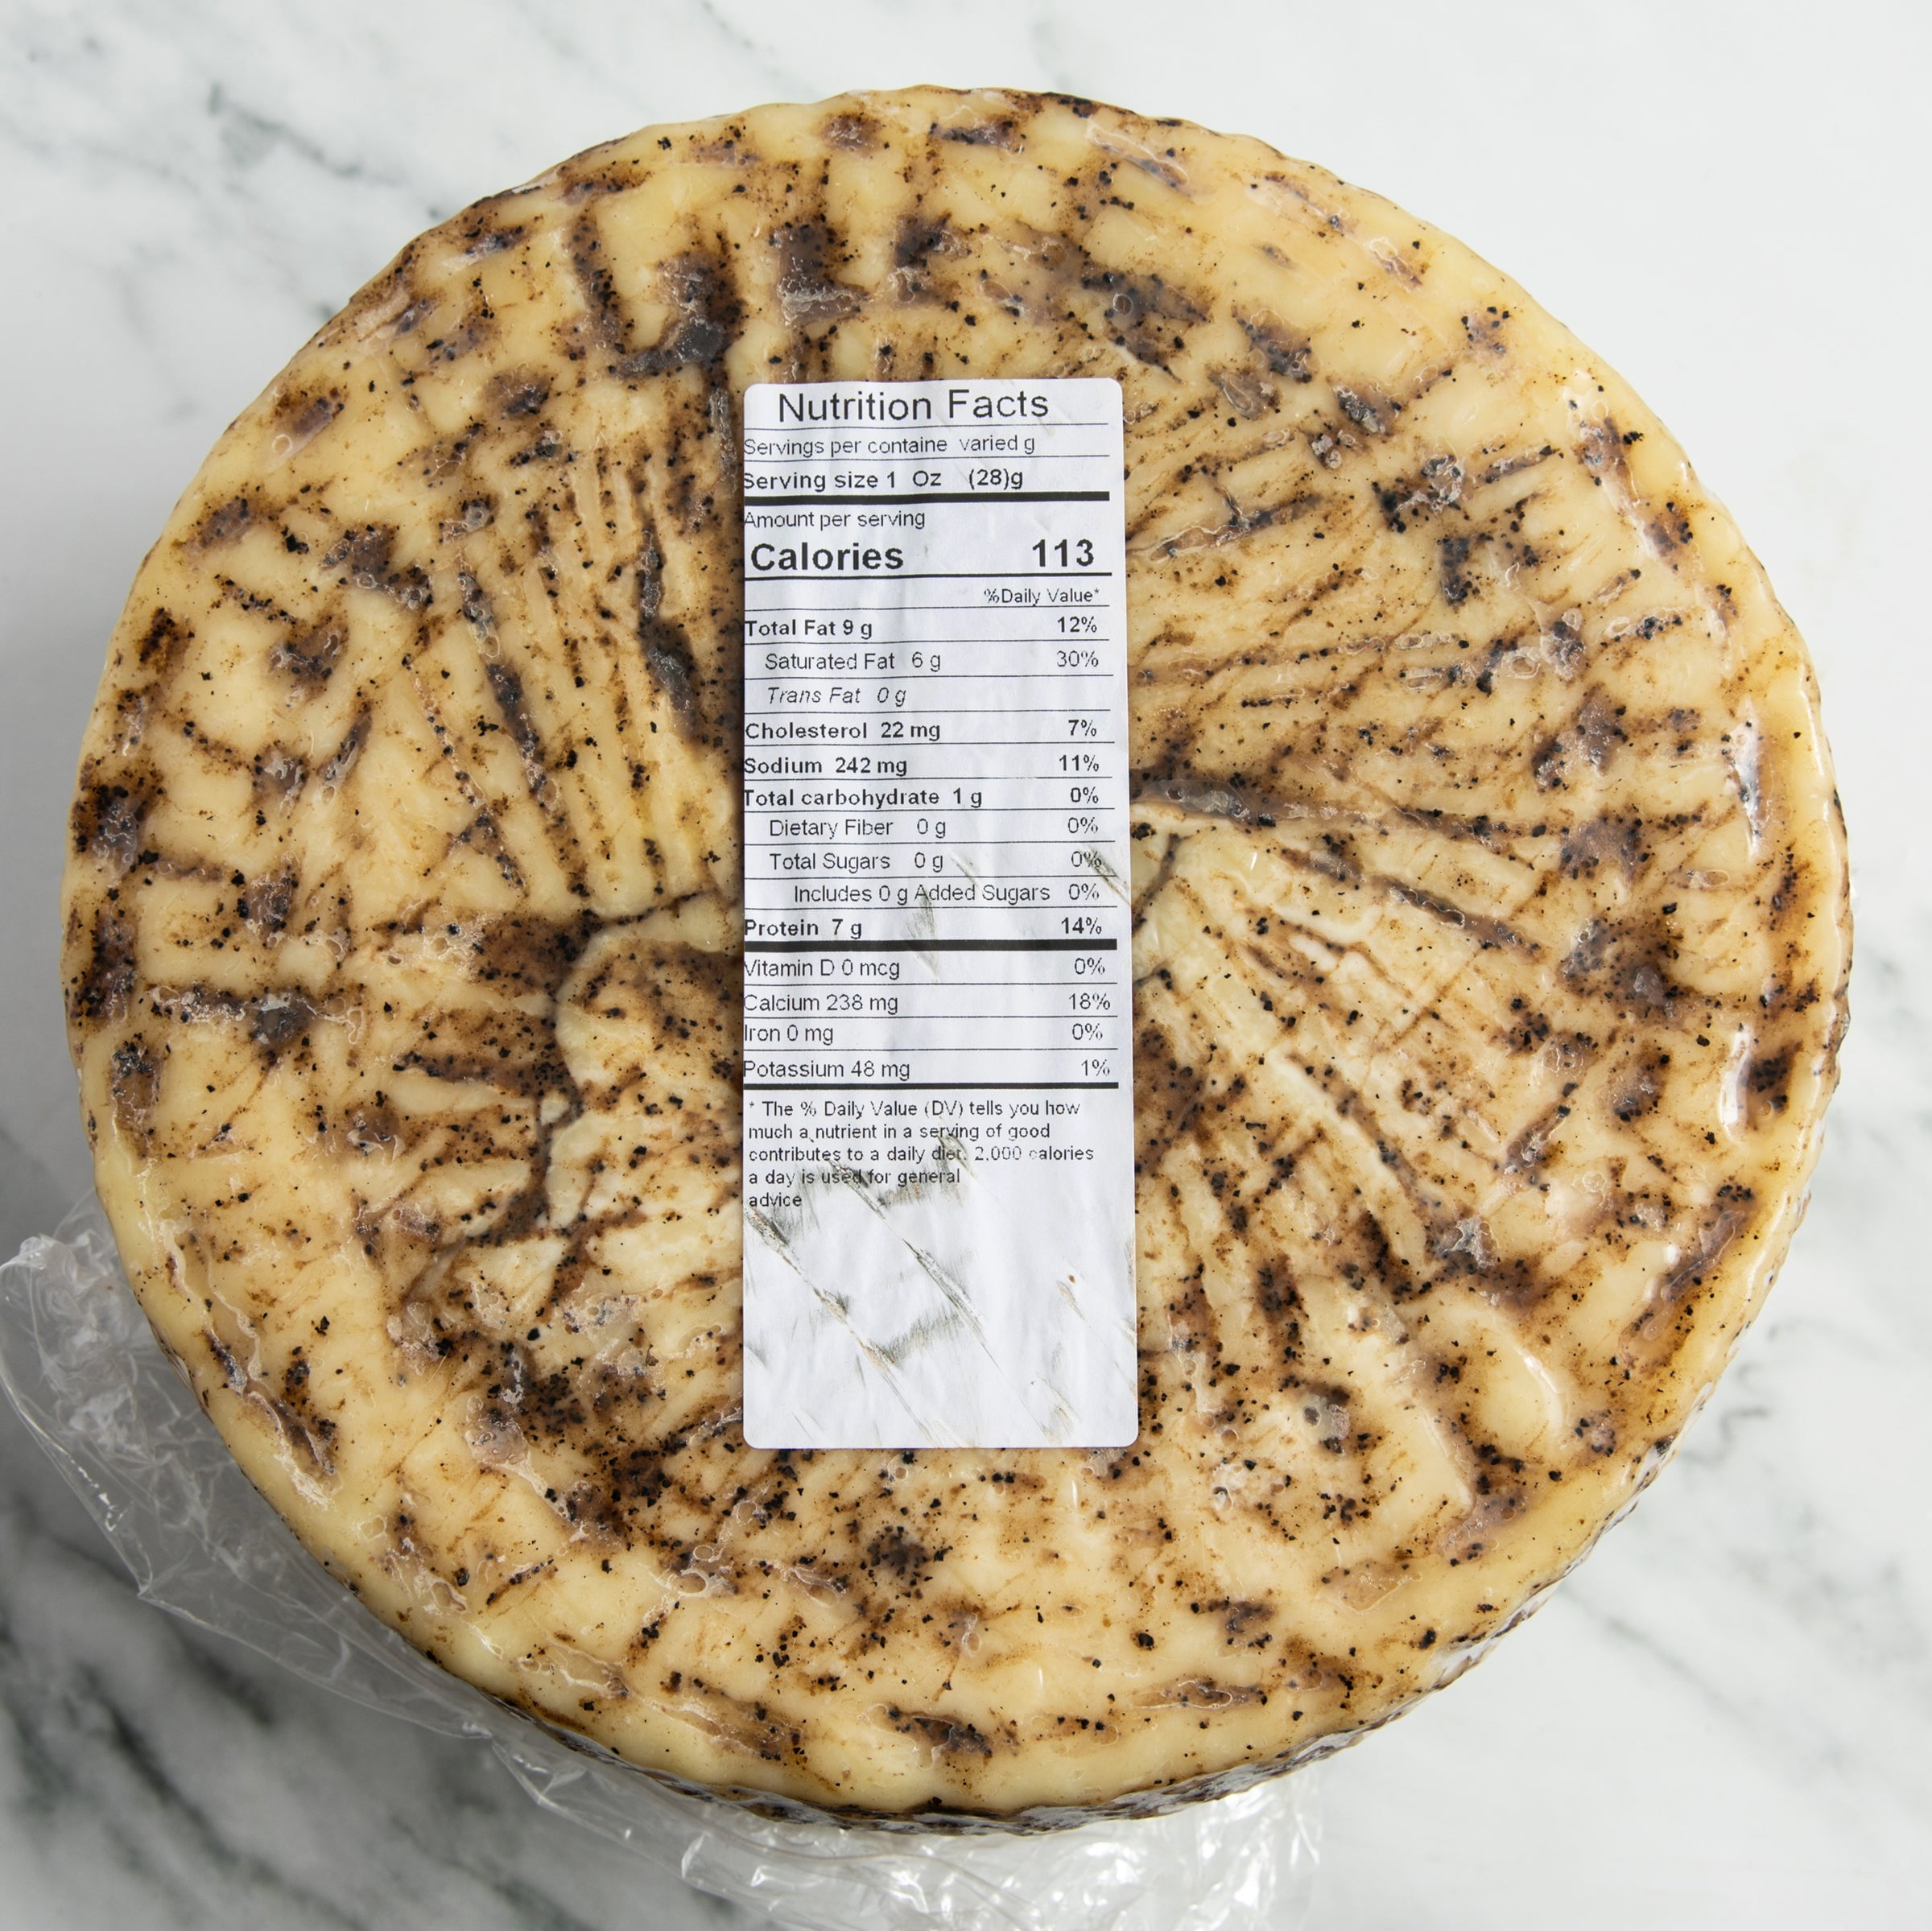 Buy Wheels of Pecorino Al Tartufo Cheese from Italy in Bulk Online